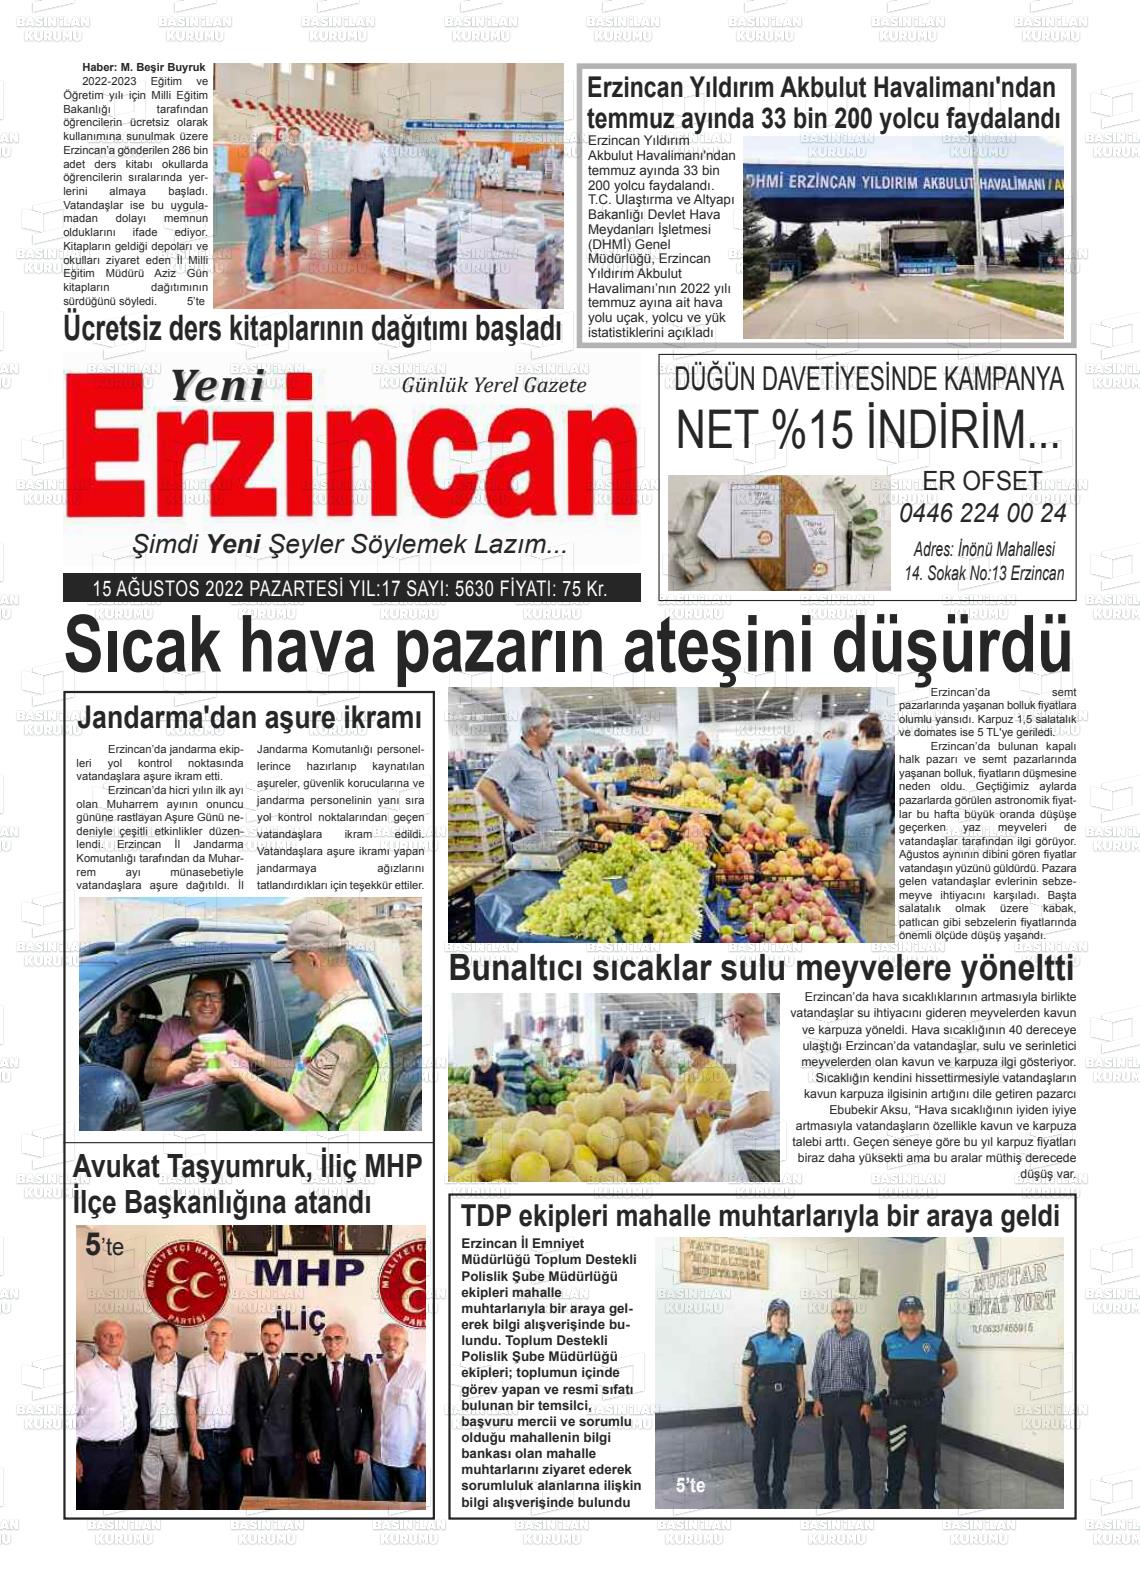 15 Ağustos 2022 Yeni Erzincan Gazete Manşeti